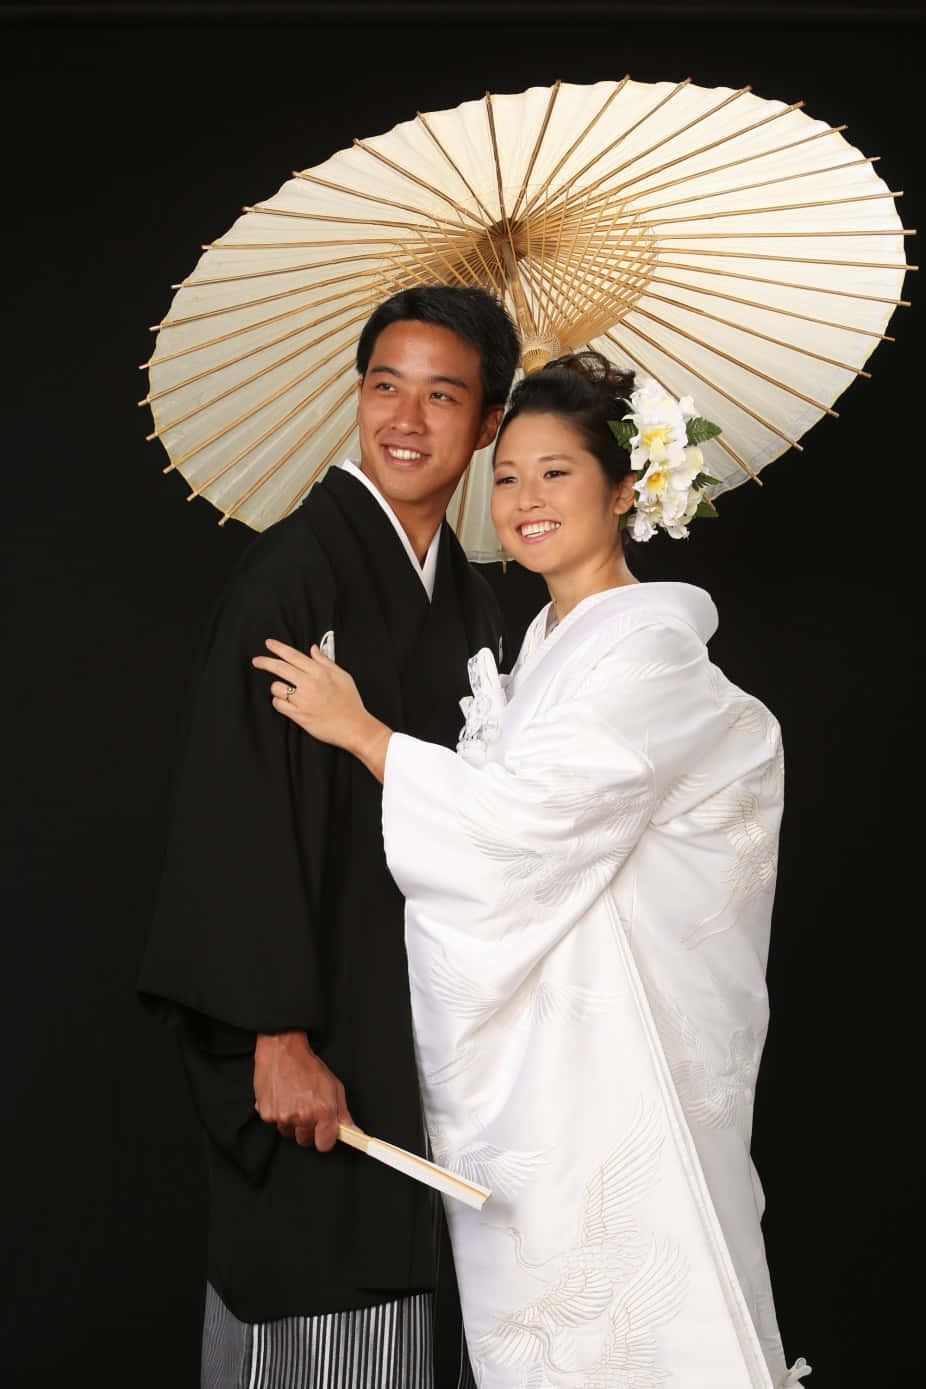 Ettpar I Kimono Och Kimono Poserar Under Ett Paraply